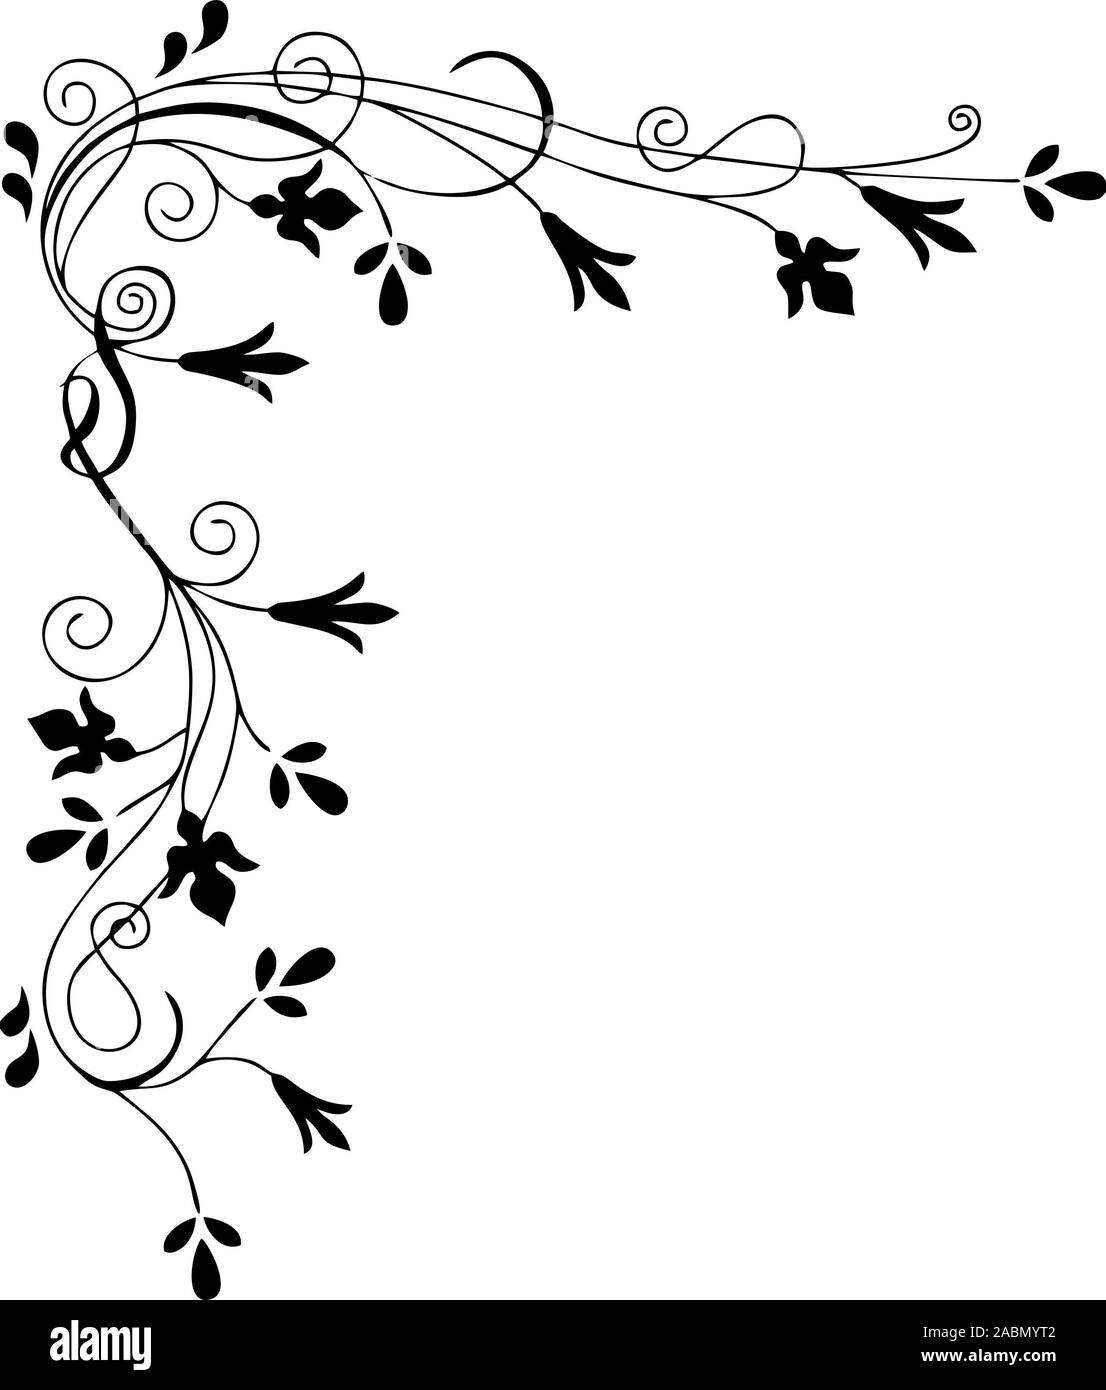 simple calligraphy flower border designs